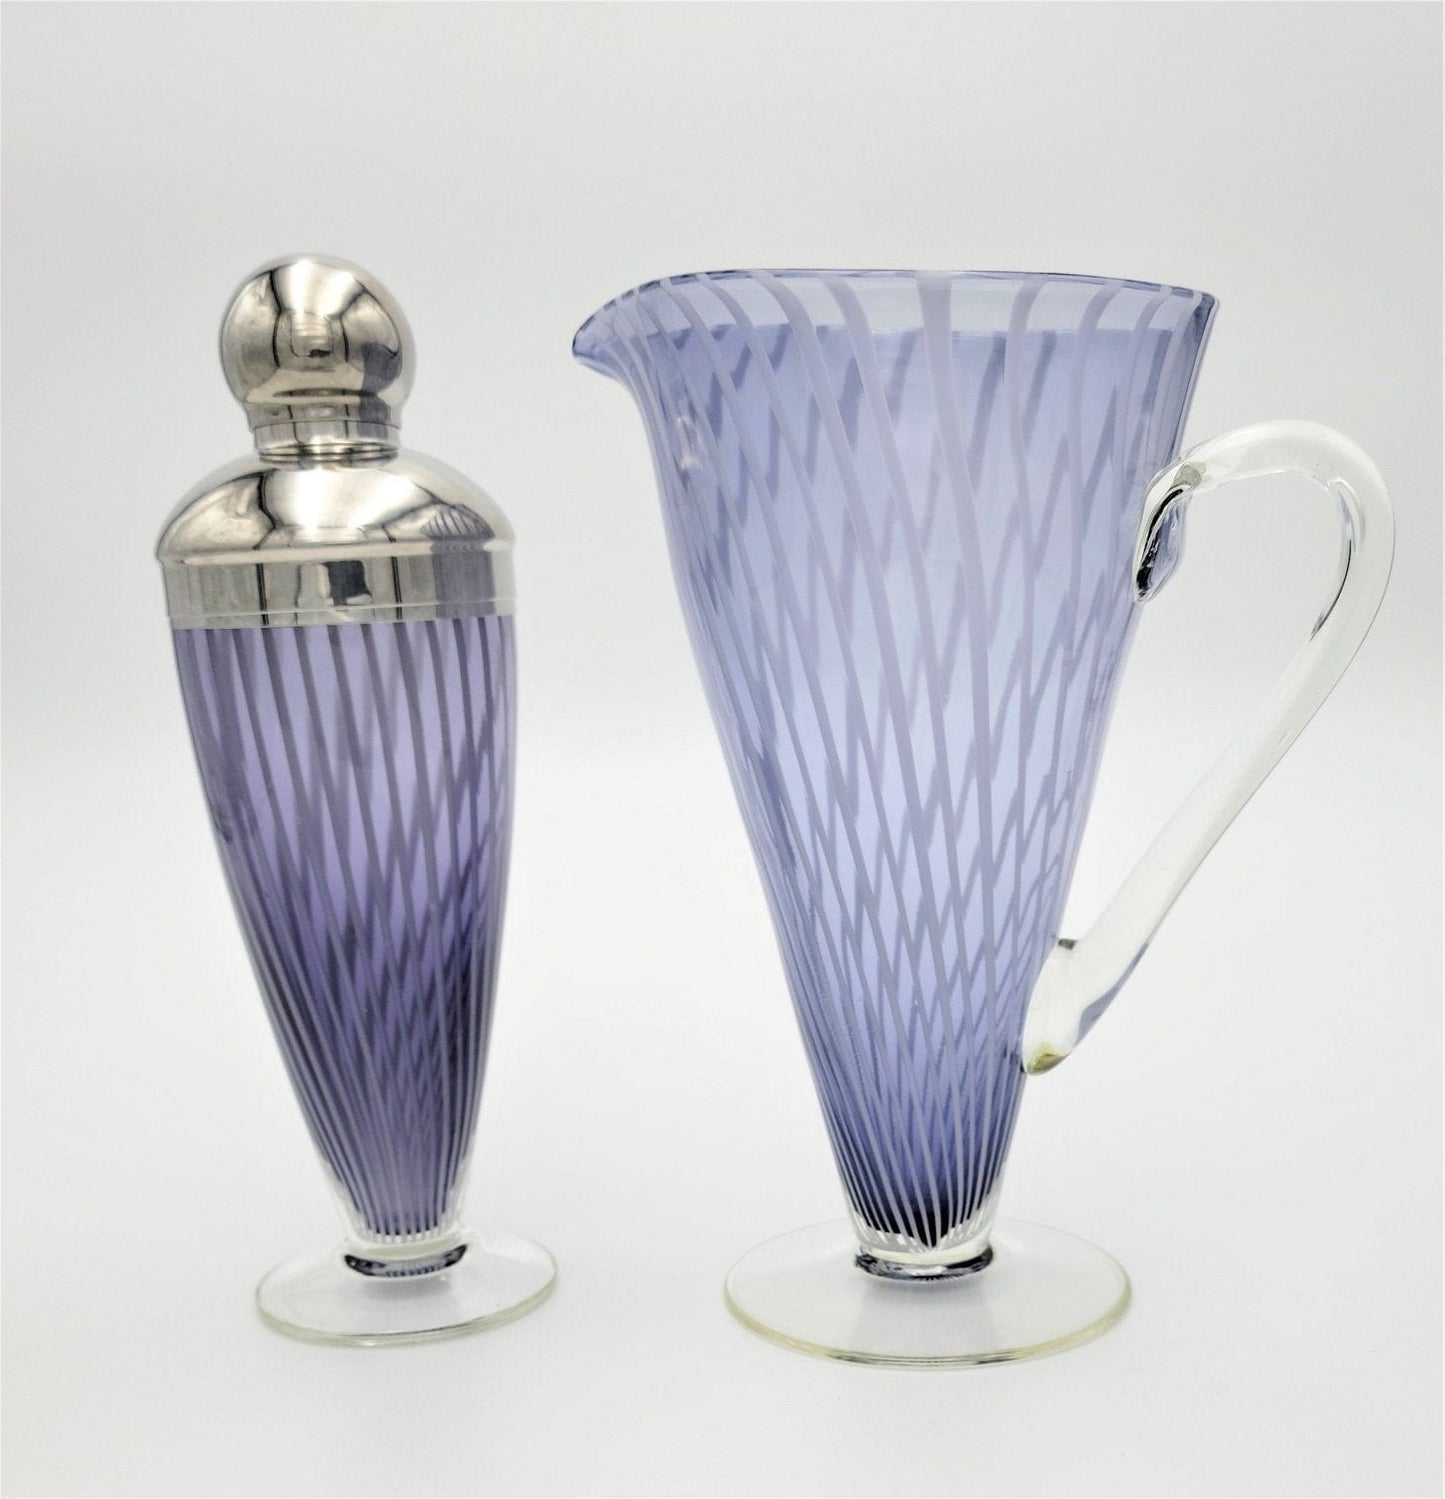 Murano Italy Barware Vintage Designer Italian Striped Murano Glass Cocktail Shaker and Pitcher Set